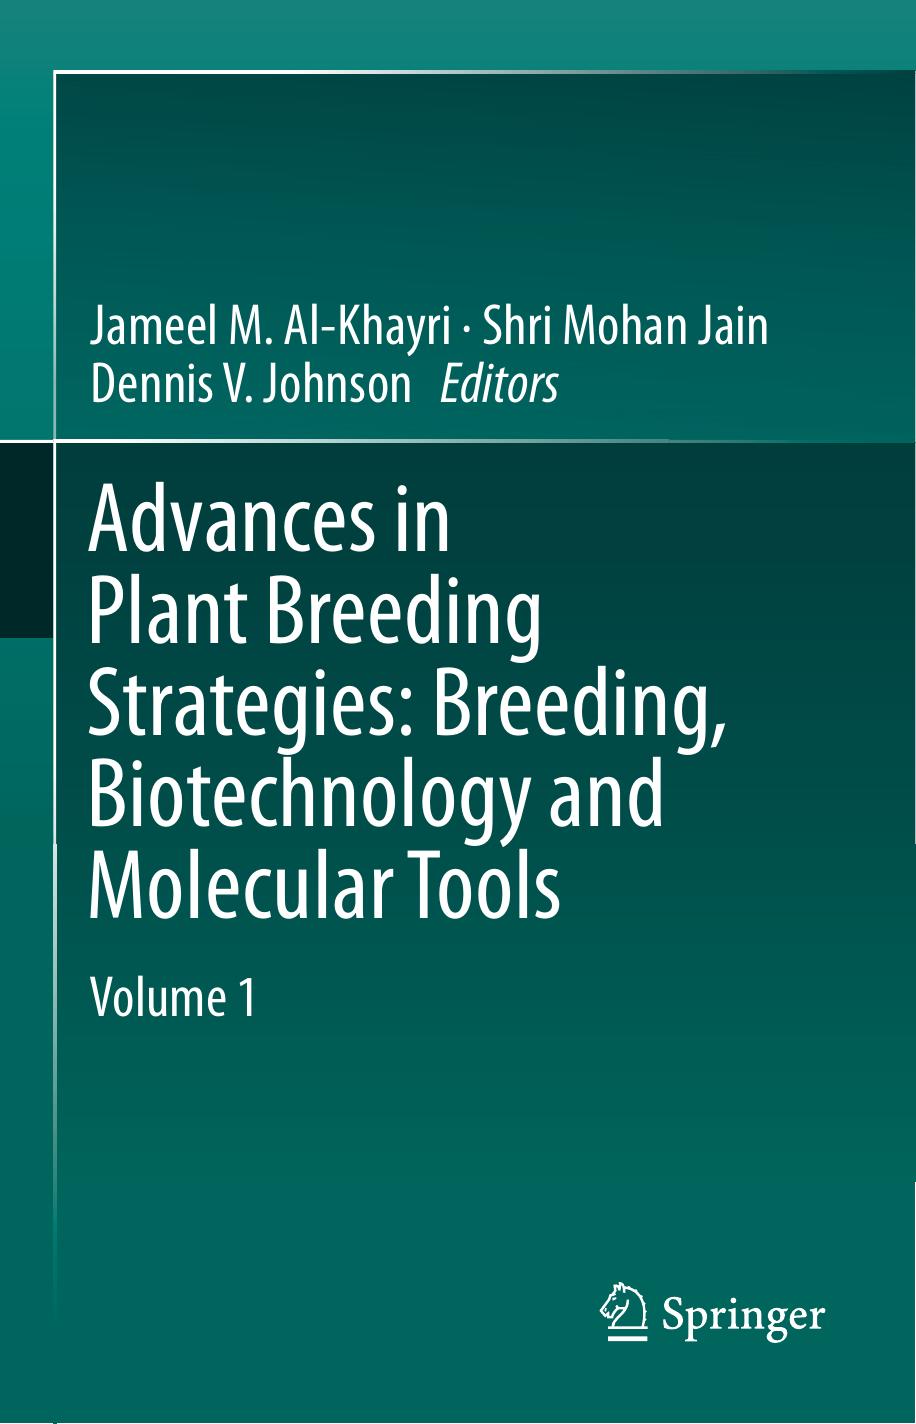 Advances in Plant Breeding Strategies  Breeding, Biotechnology and Molecular Tools 2015